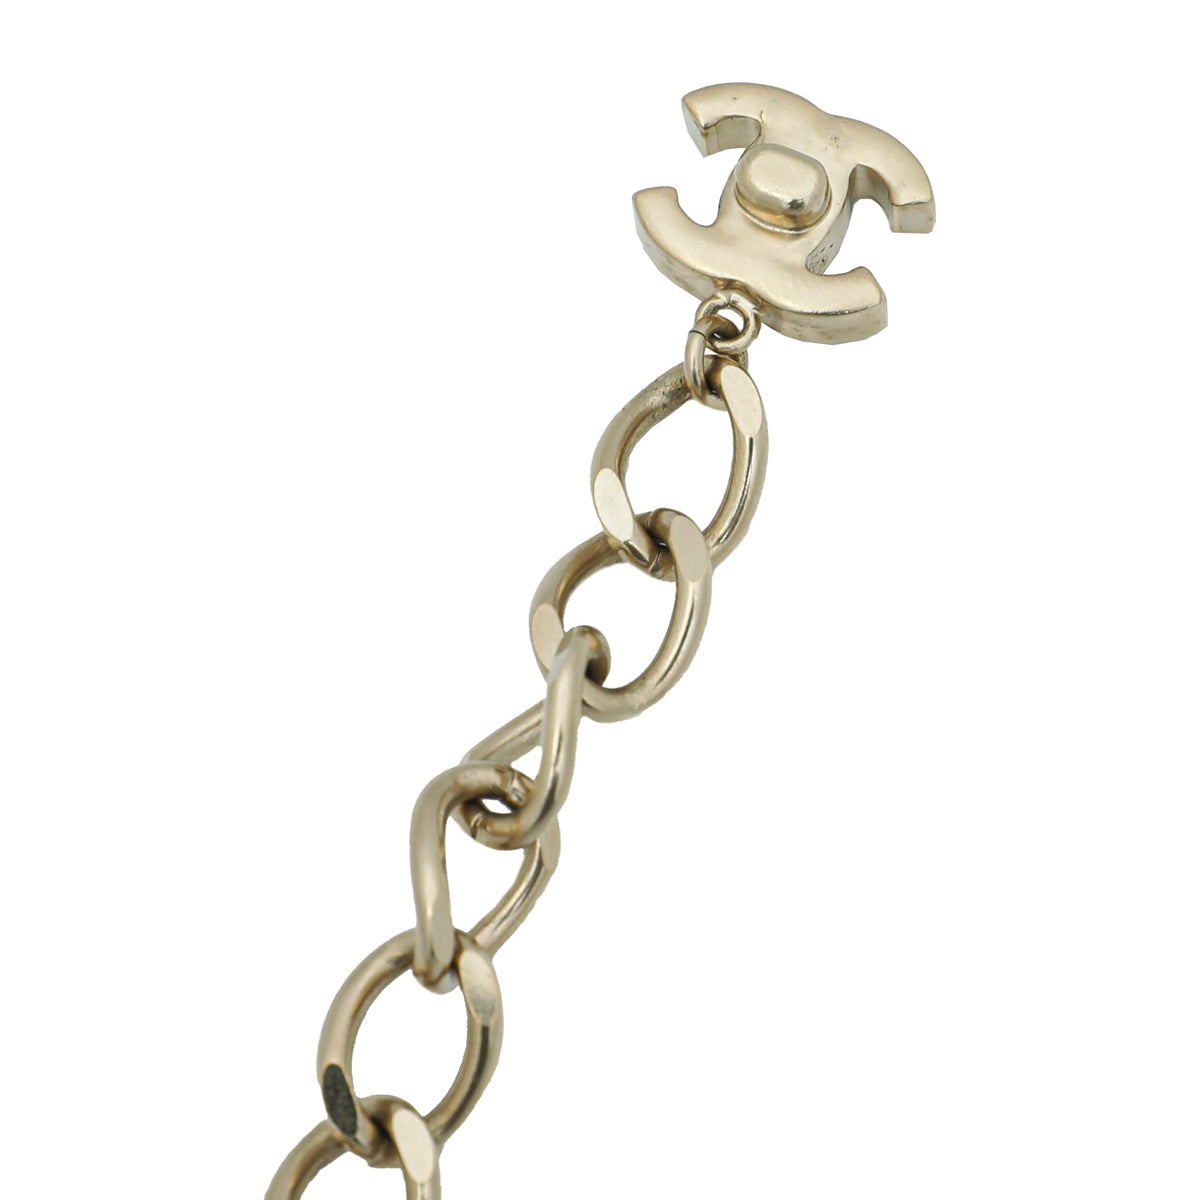 Chanel Metallic Champagne CC Turnlock Interwoven Double Chain Necklace